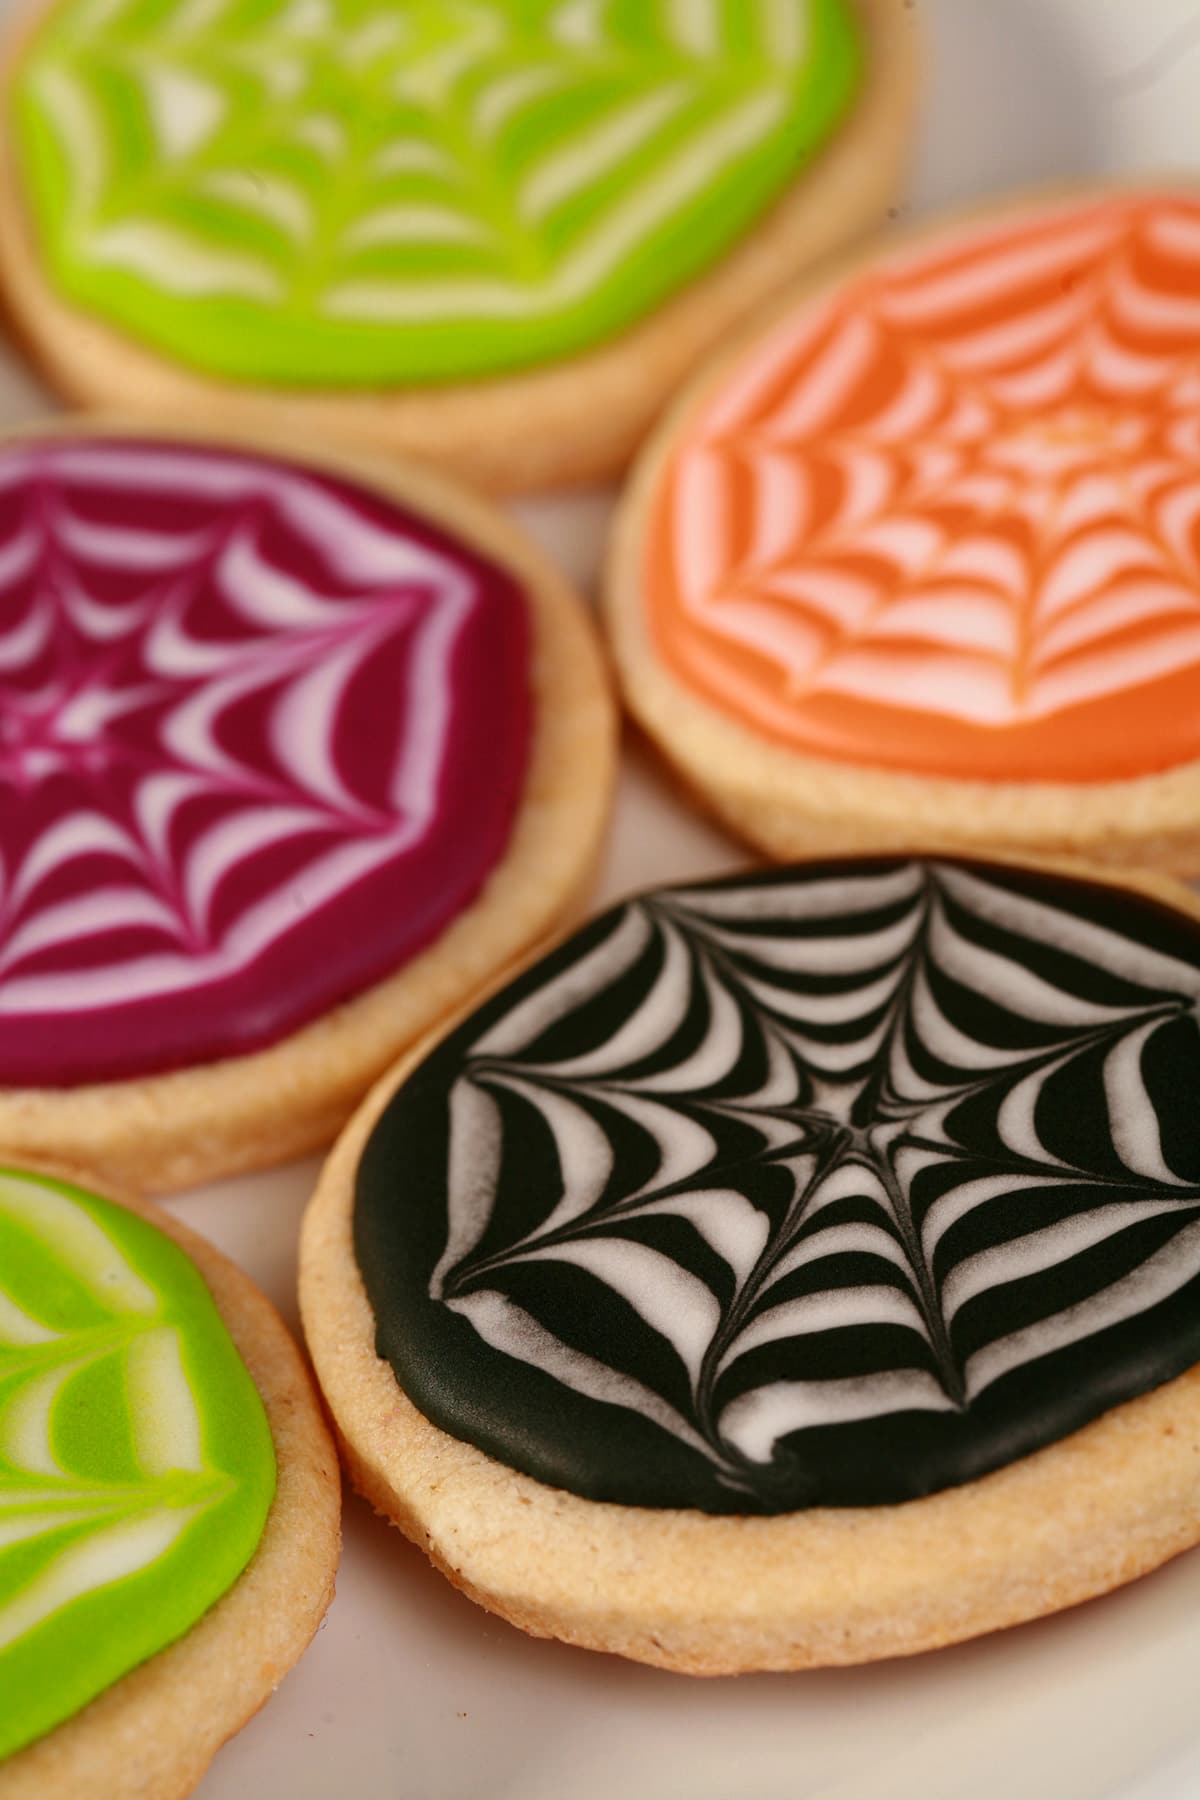 Details about   Cobweb cookie cutter trick treats spider web Halloween party spiderweb biscuit 